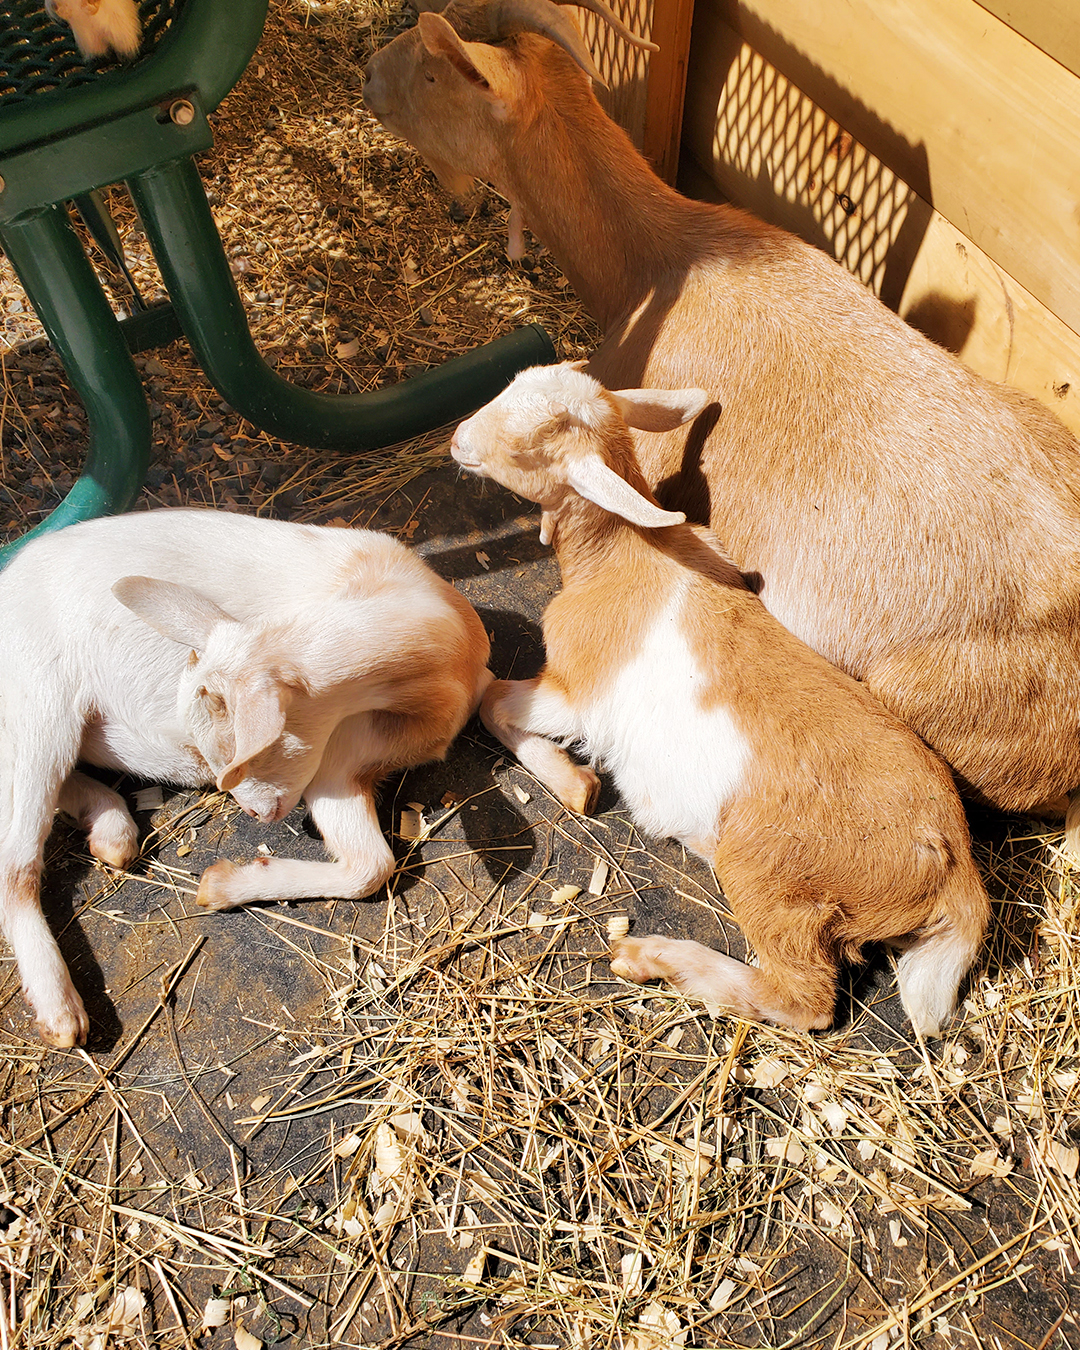 We love Frederick Farm Goat Sanctuary